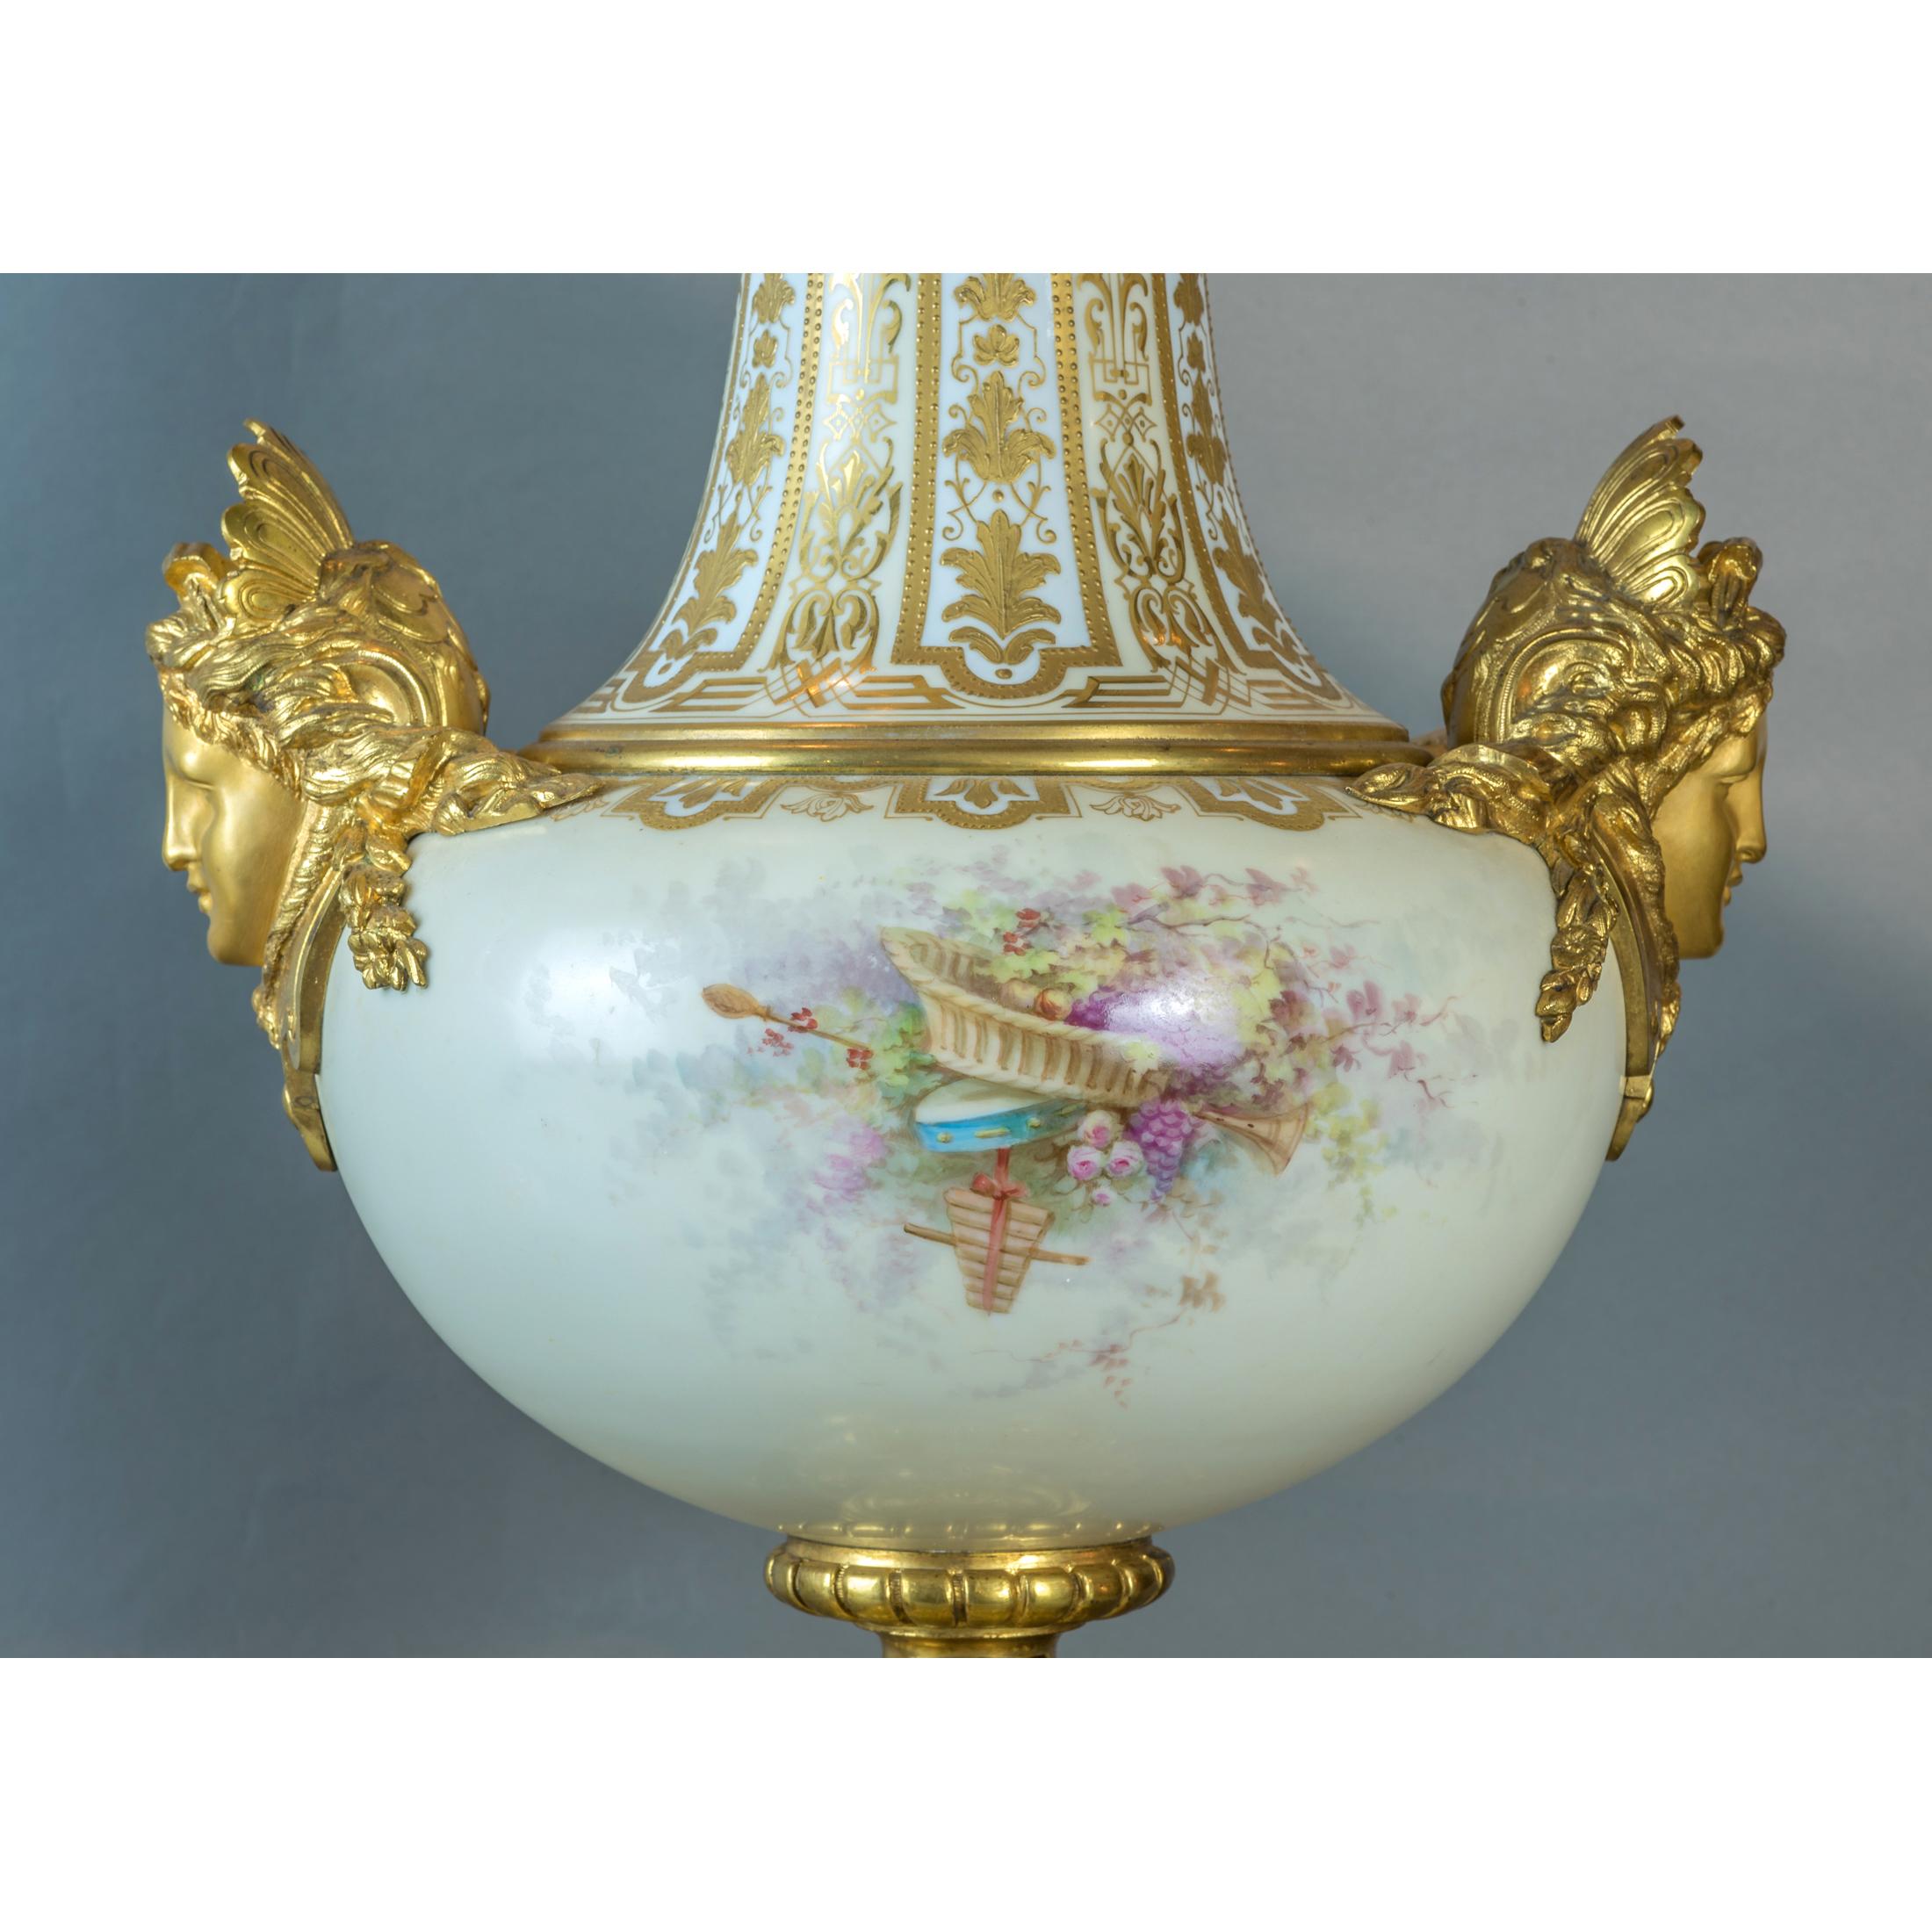 Pair of Ormolu-Mounted Sèvres-style Porcelain Champlevé Vases For Sale 7